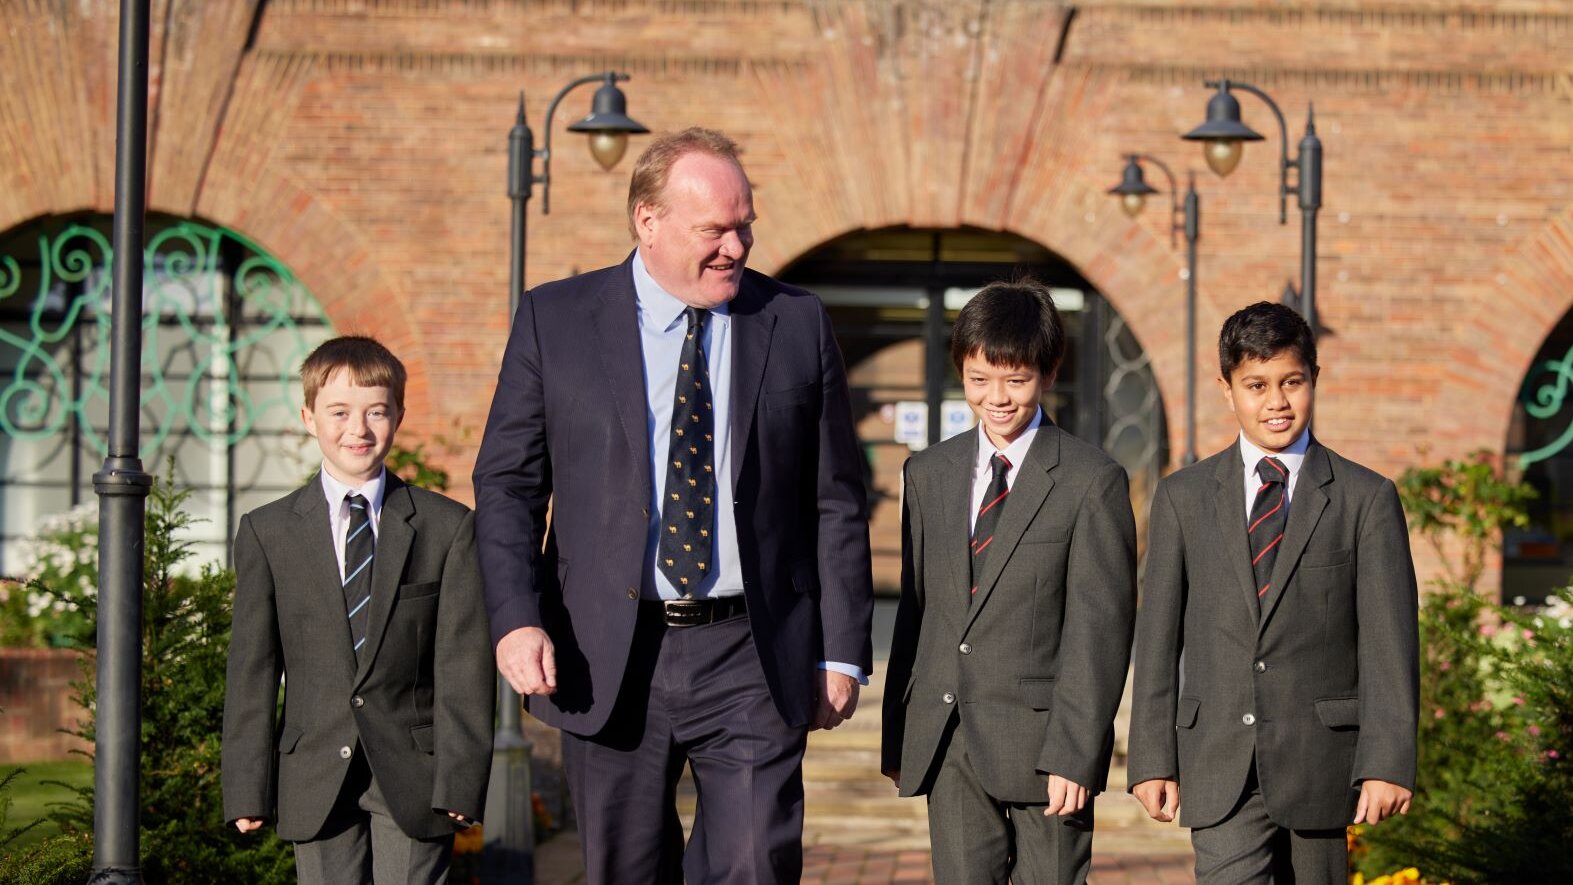 Simon Everson, Head Teacher at Merchant Taylors' School walking with three school pupils